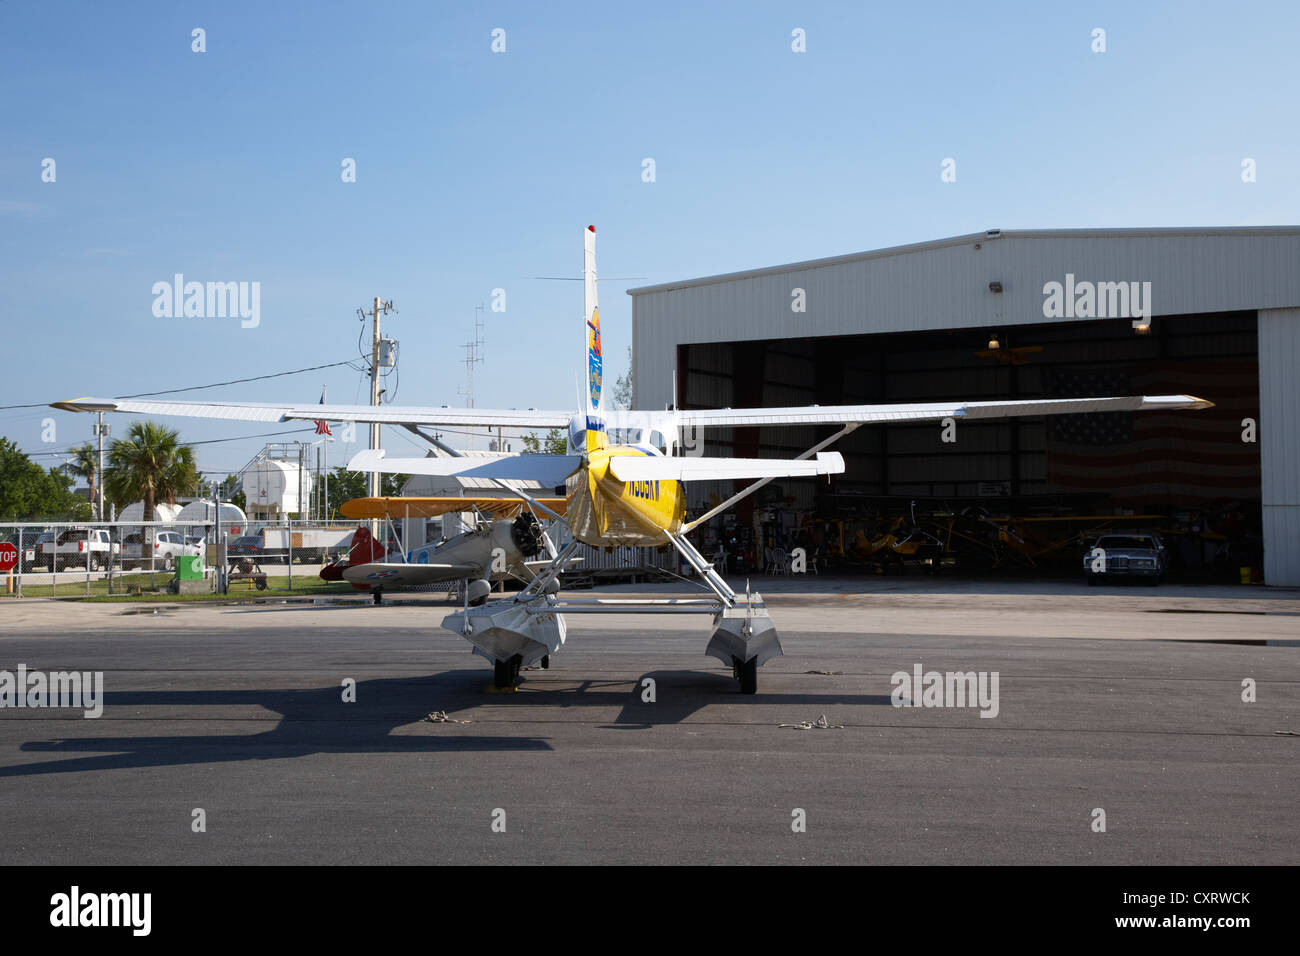 Cessna U206g ala fissa motore unico idrovolante davanti hangar Aeroporto Internazionale Key West Florida Keys usa Foto Stock